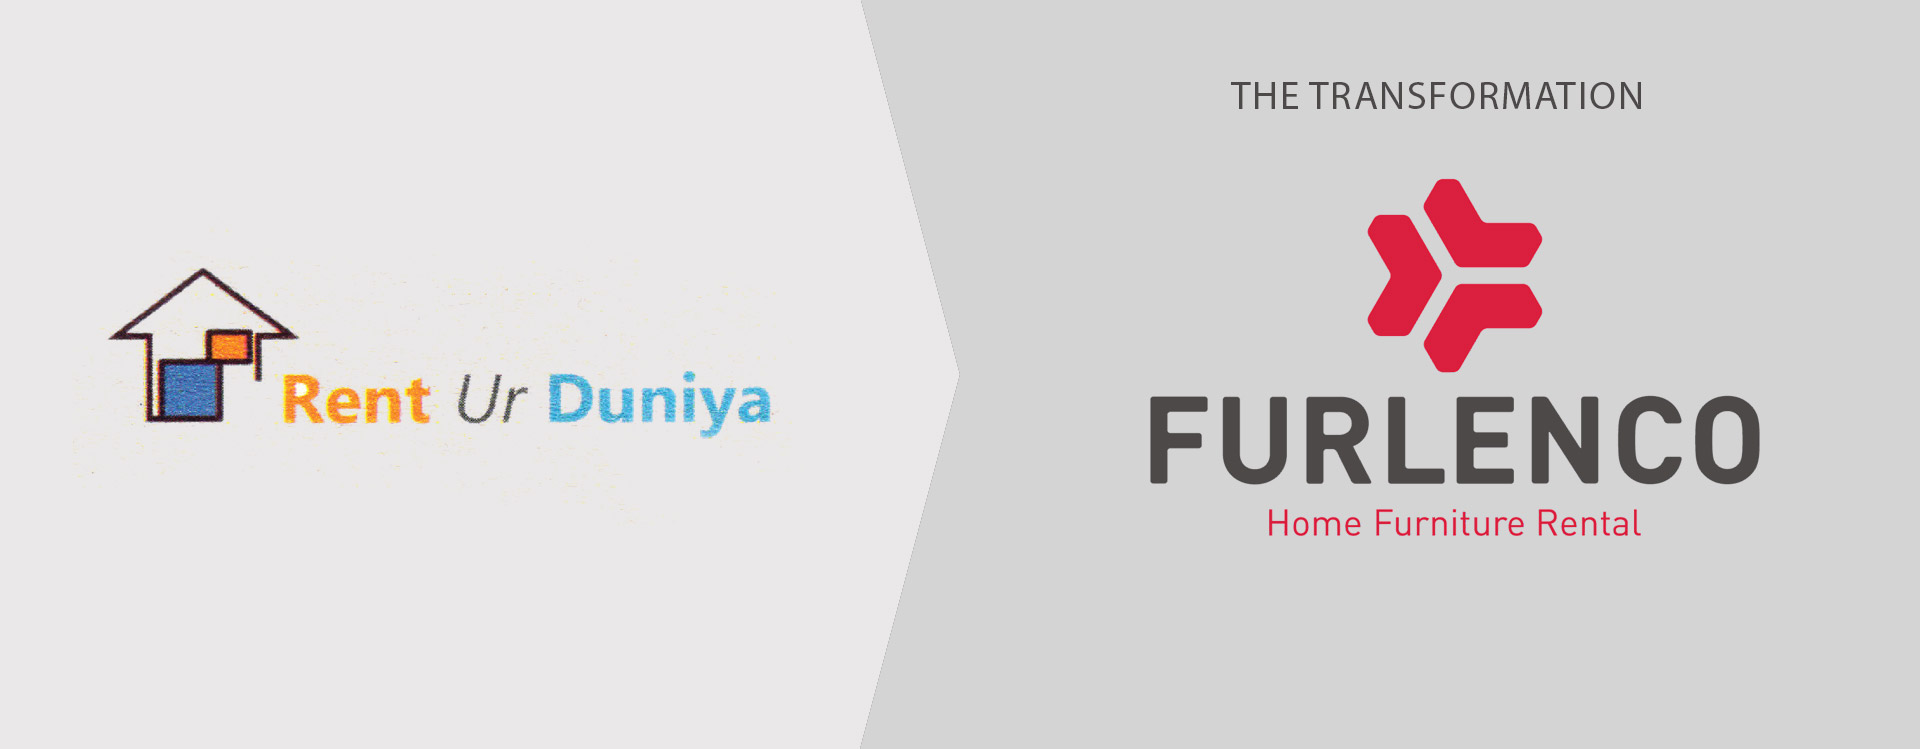 Sheela Foam Acquires Furniture brands Kurl-on And Furlenco